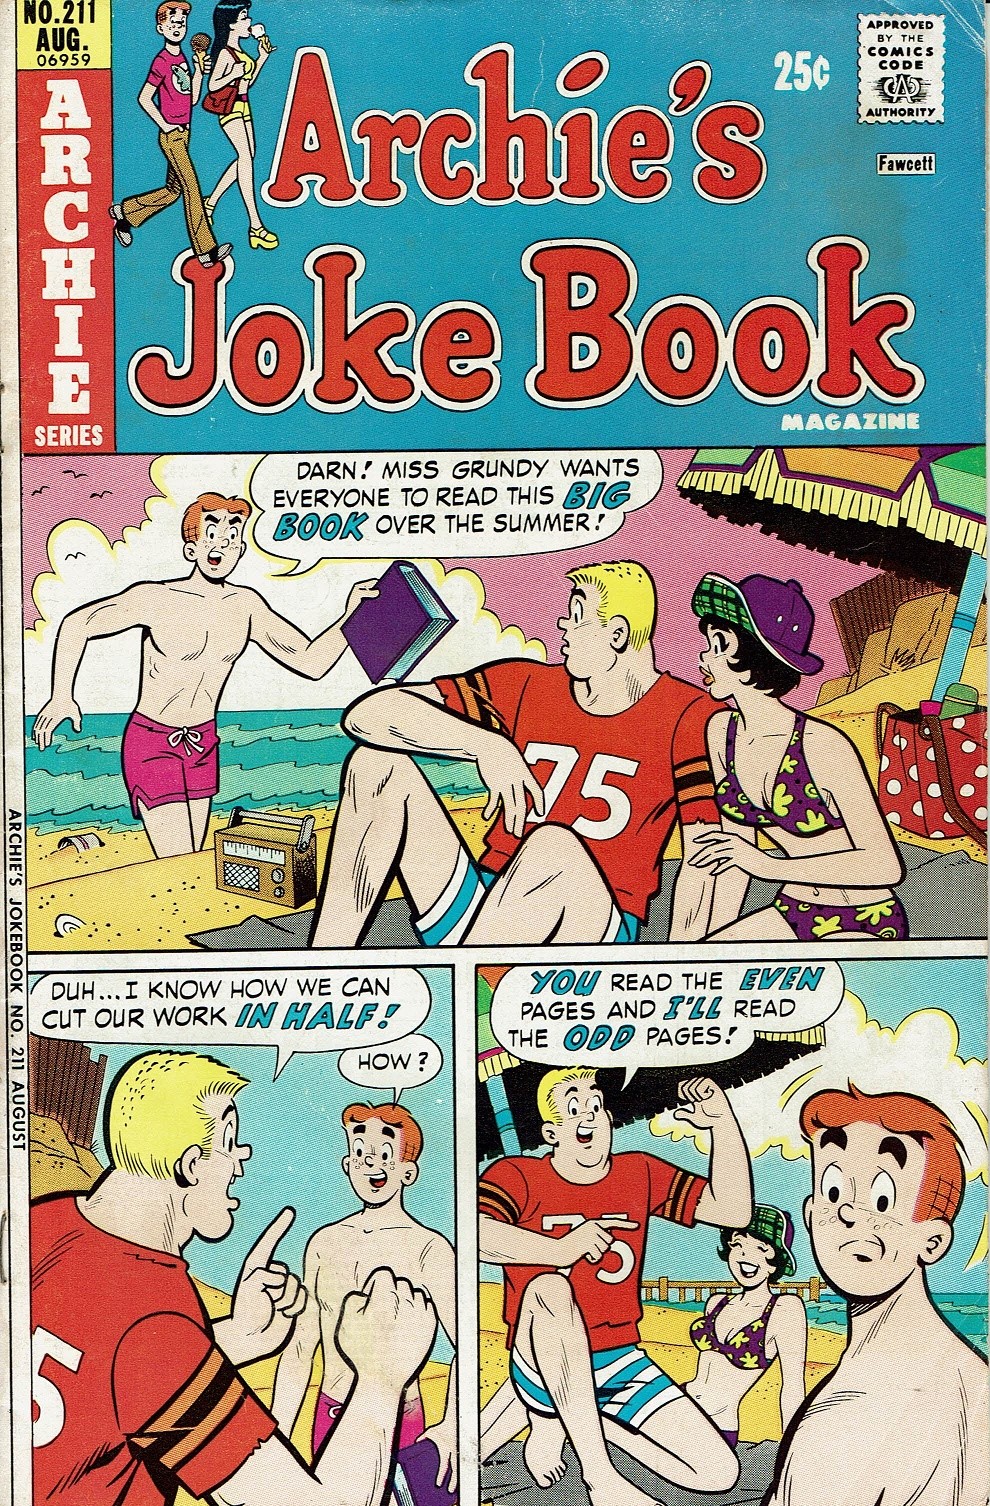 Archie's Joke Book Magazine issue 211 - Page 1